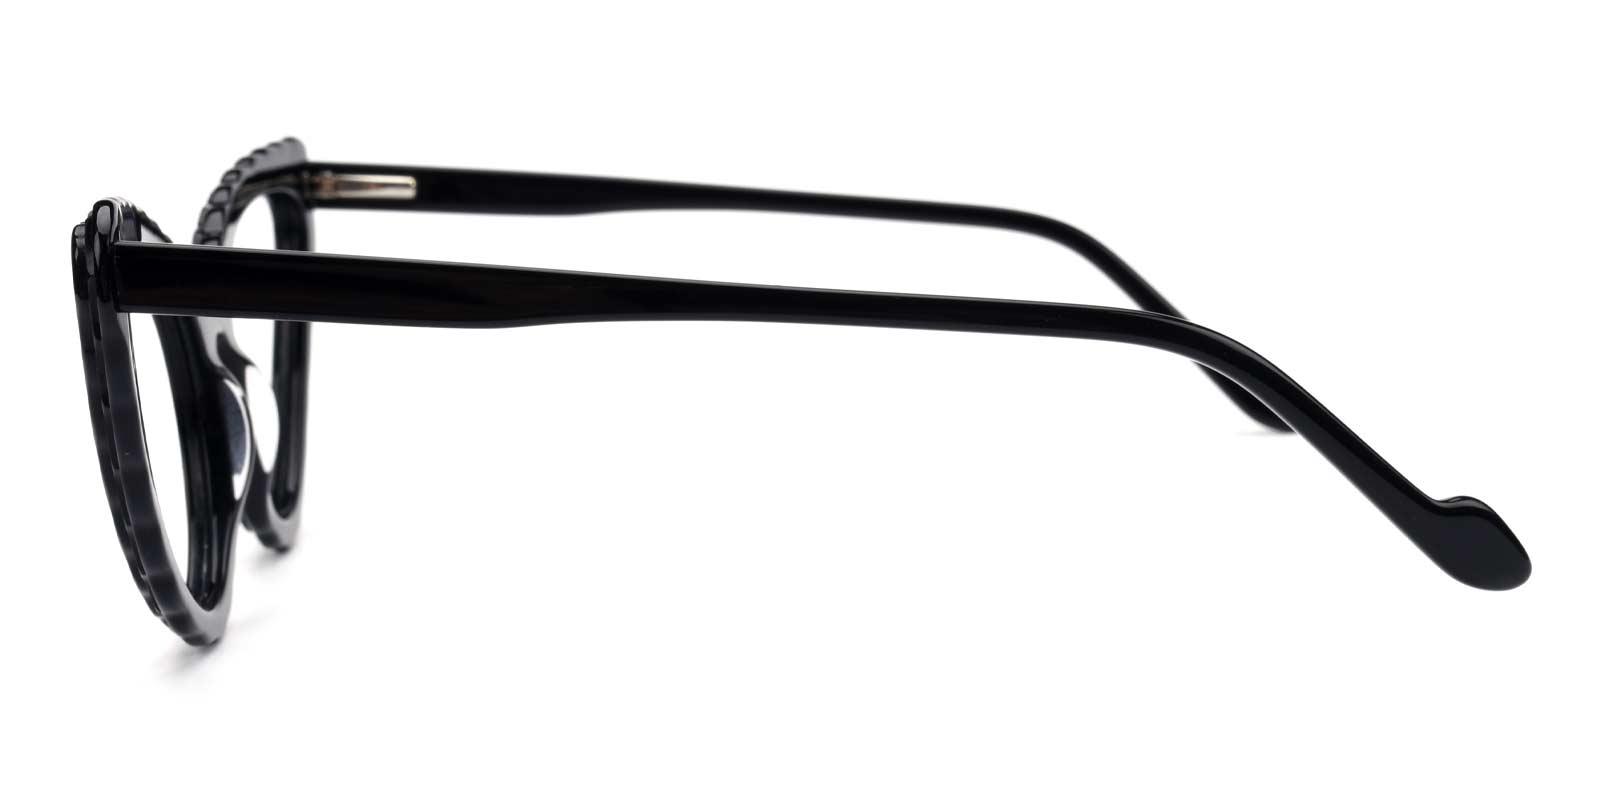 Barry-Black-Cat-Acetate-Eyeglasses-detail